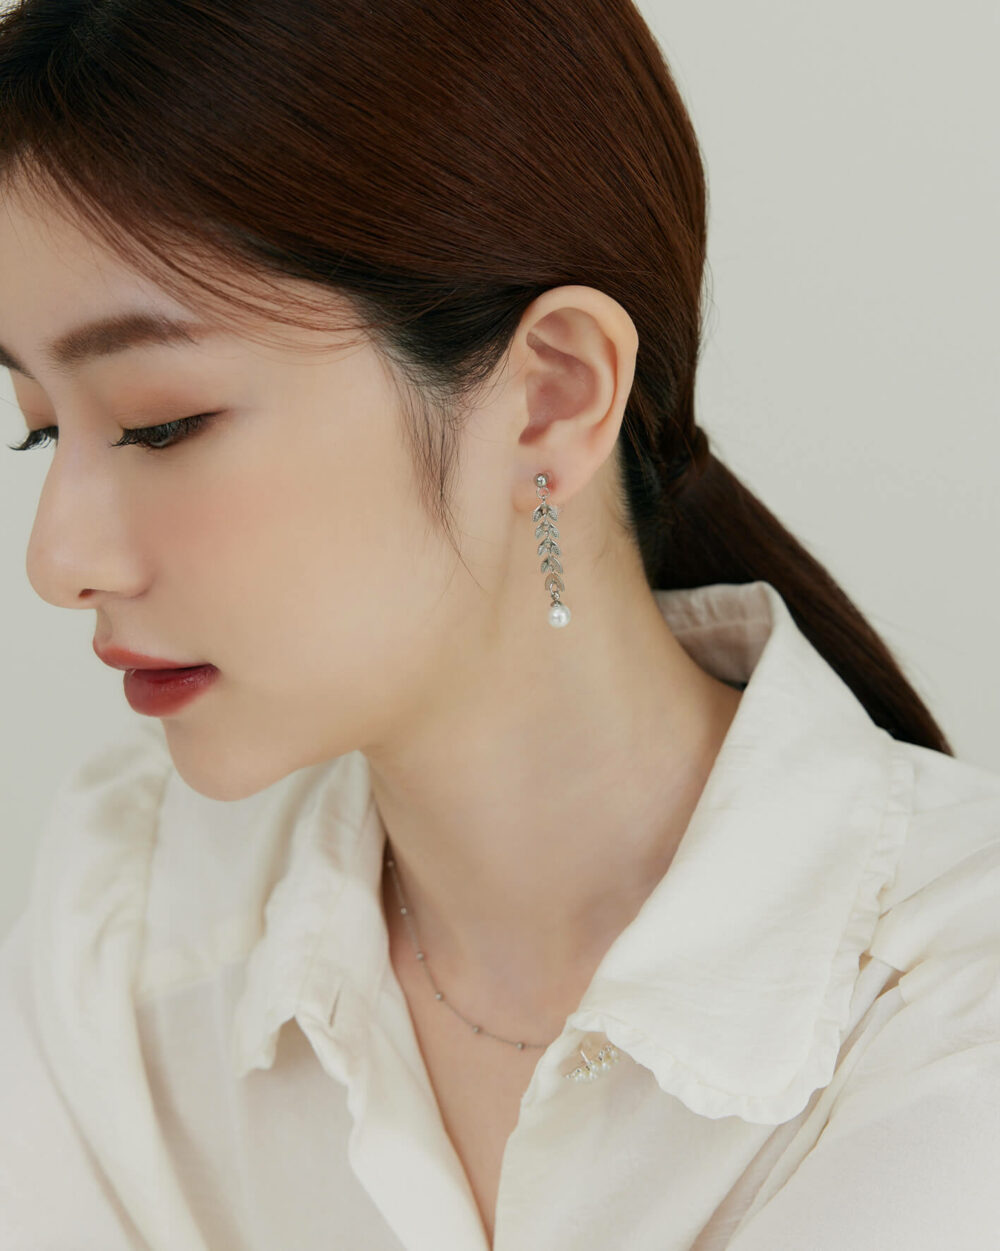 Eco安珂,韓國飾品,韓國耳環,耳針式耳環,矽膠夾耳環,透明耳夾垂墜耳環,無痛耳夾耳環,葉子耳環